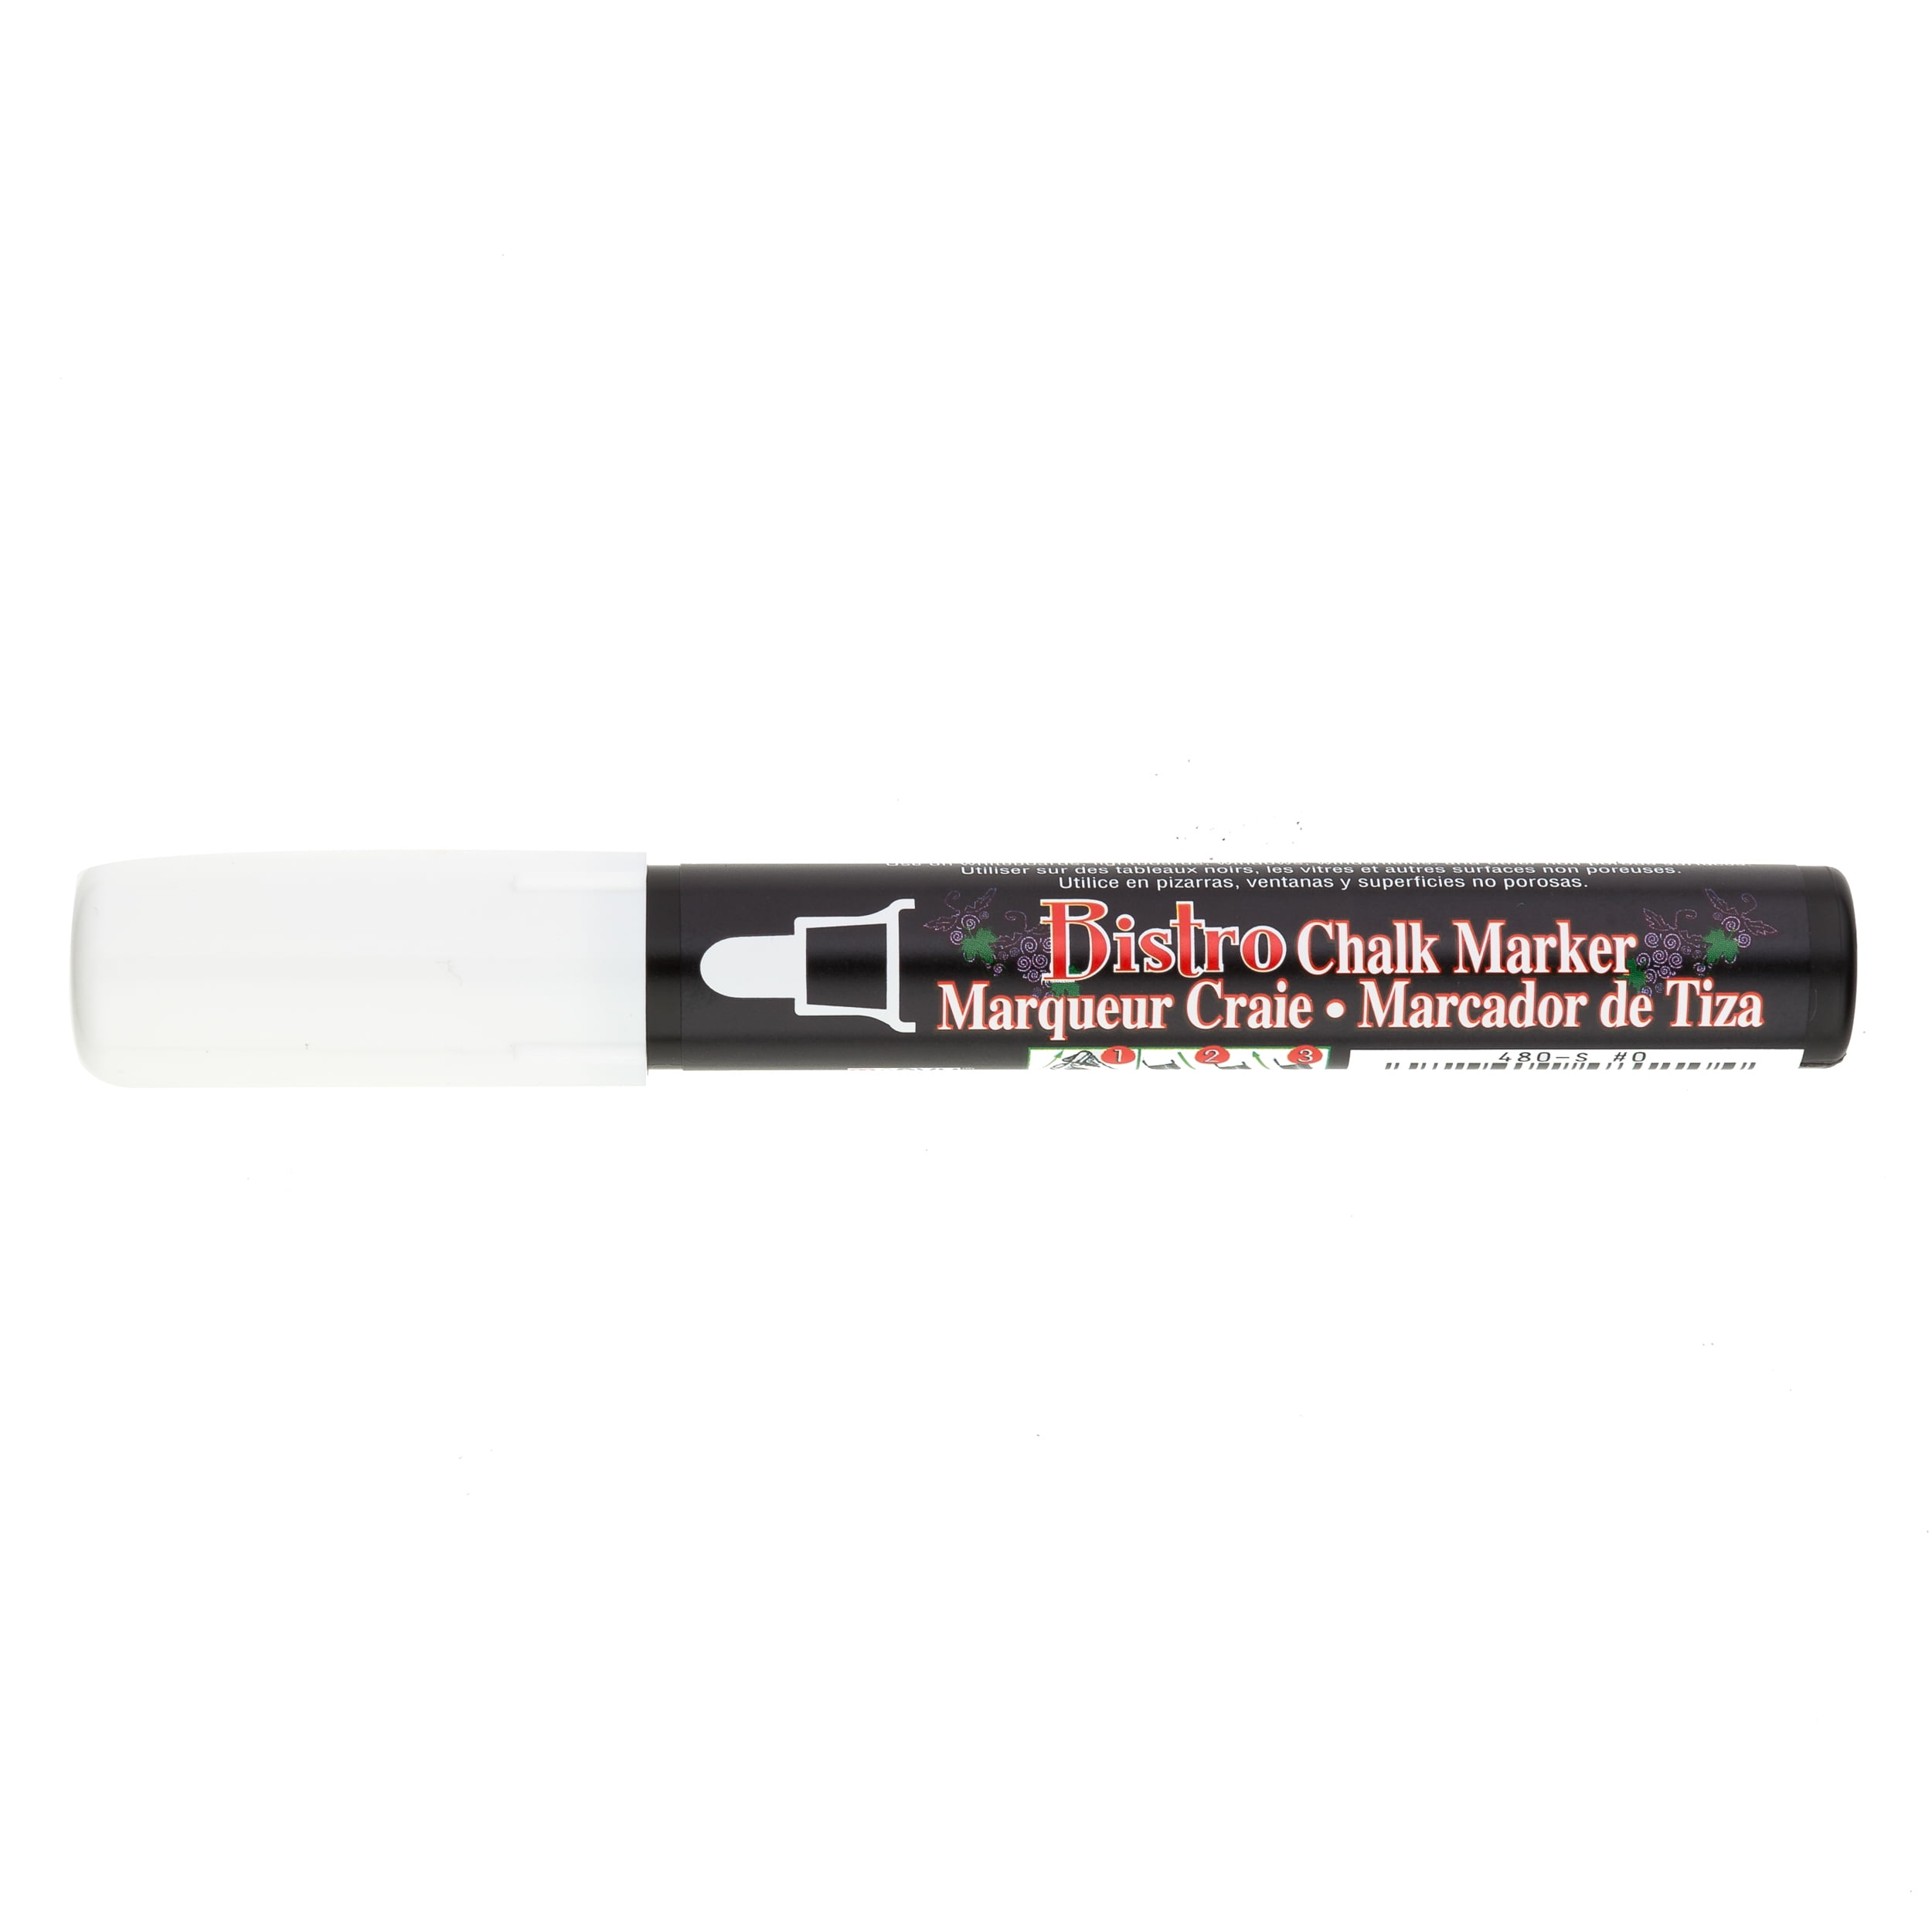 Marvy Uchida Gel Pens 0.7 Mm White 2/pack (65310824a) 65310824a : Target